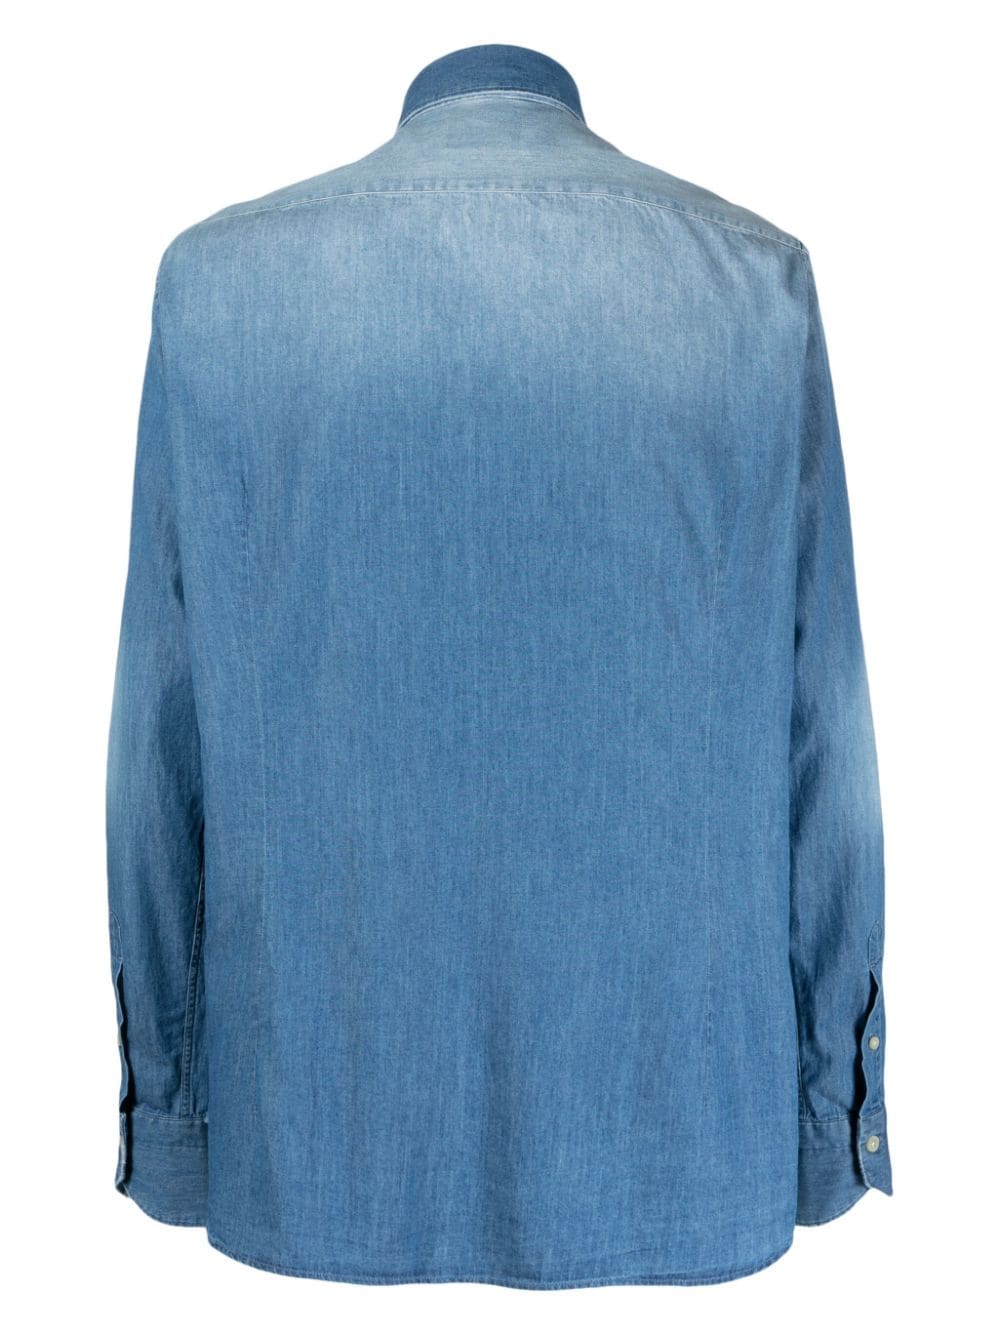 Tintoria Mattei long-sleeve washed denim shirt - Blauw